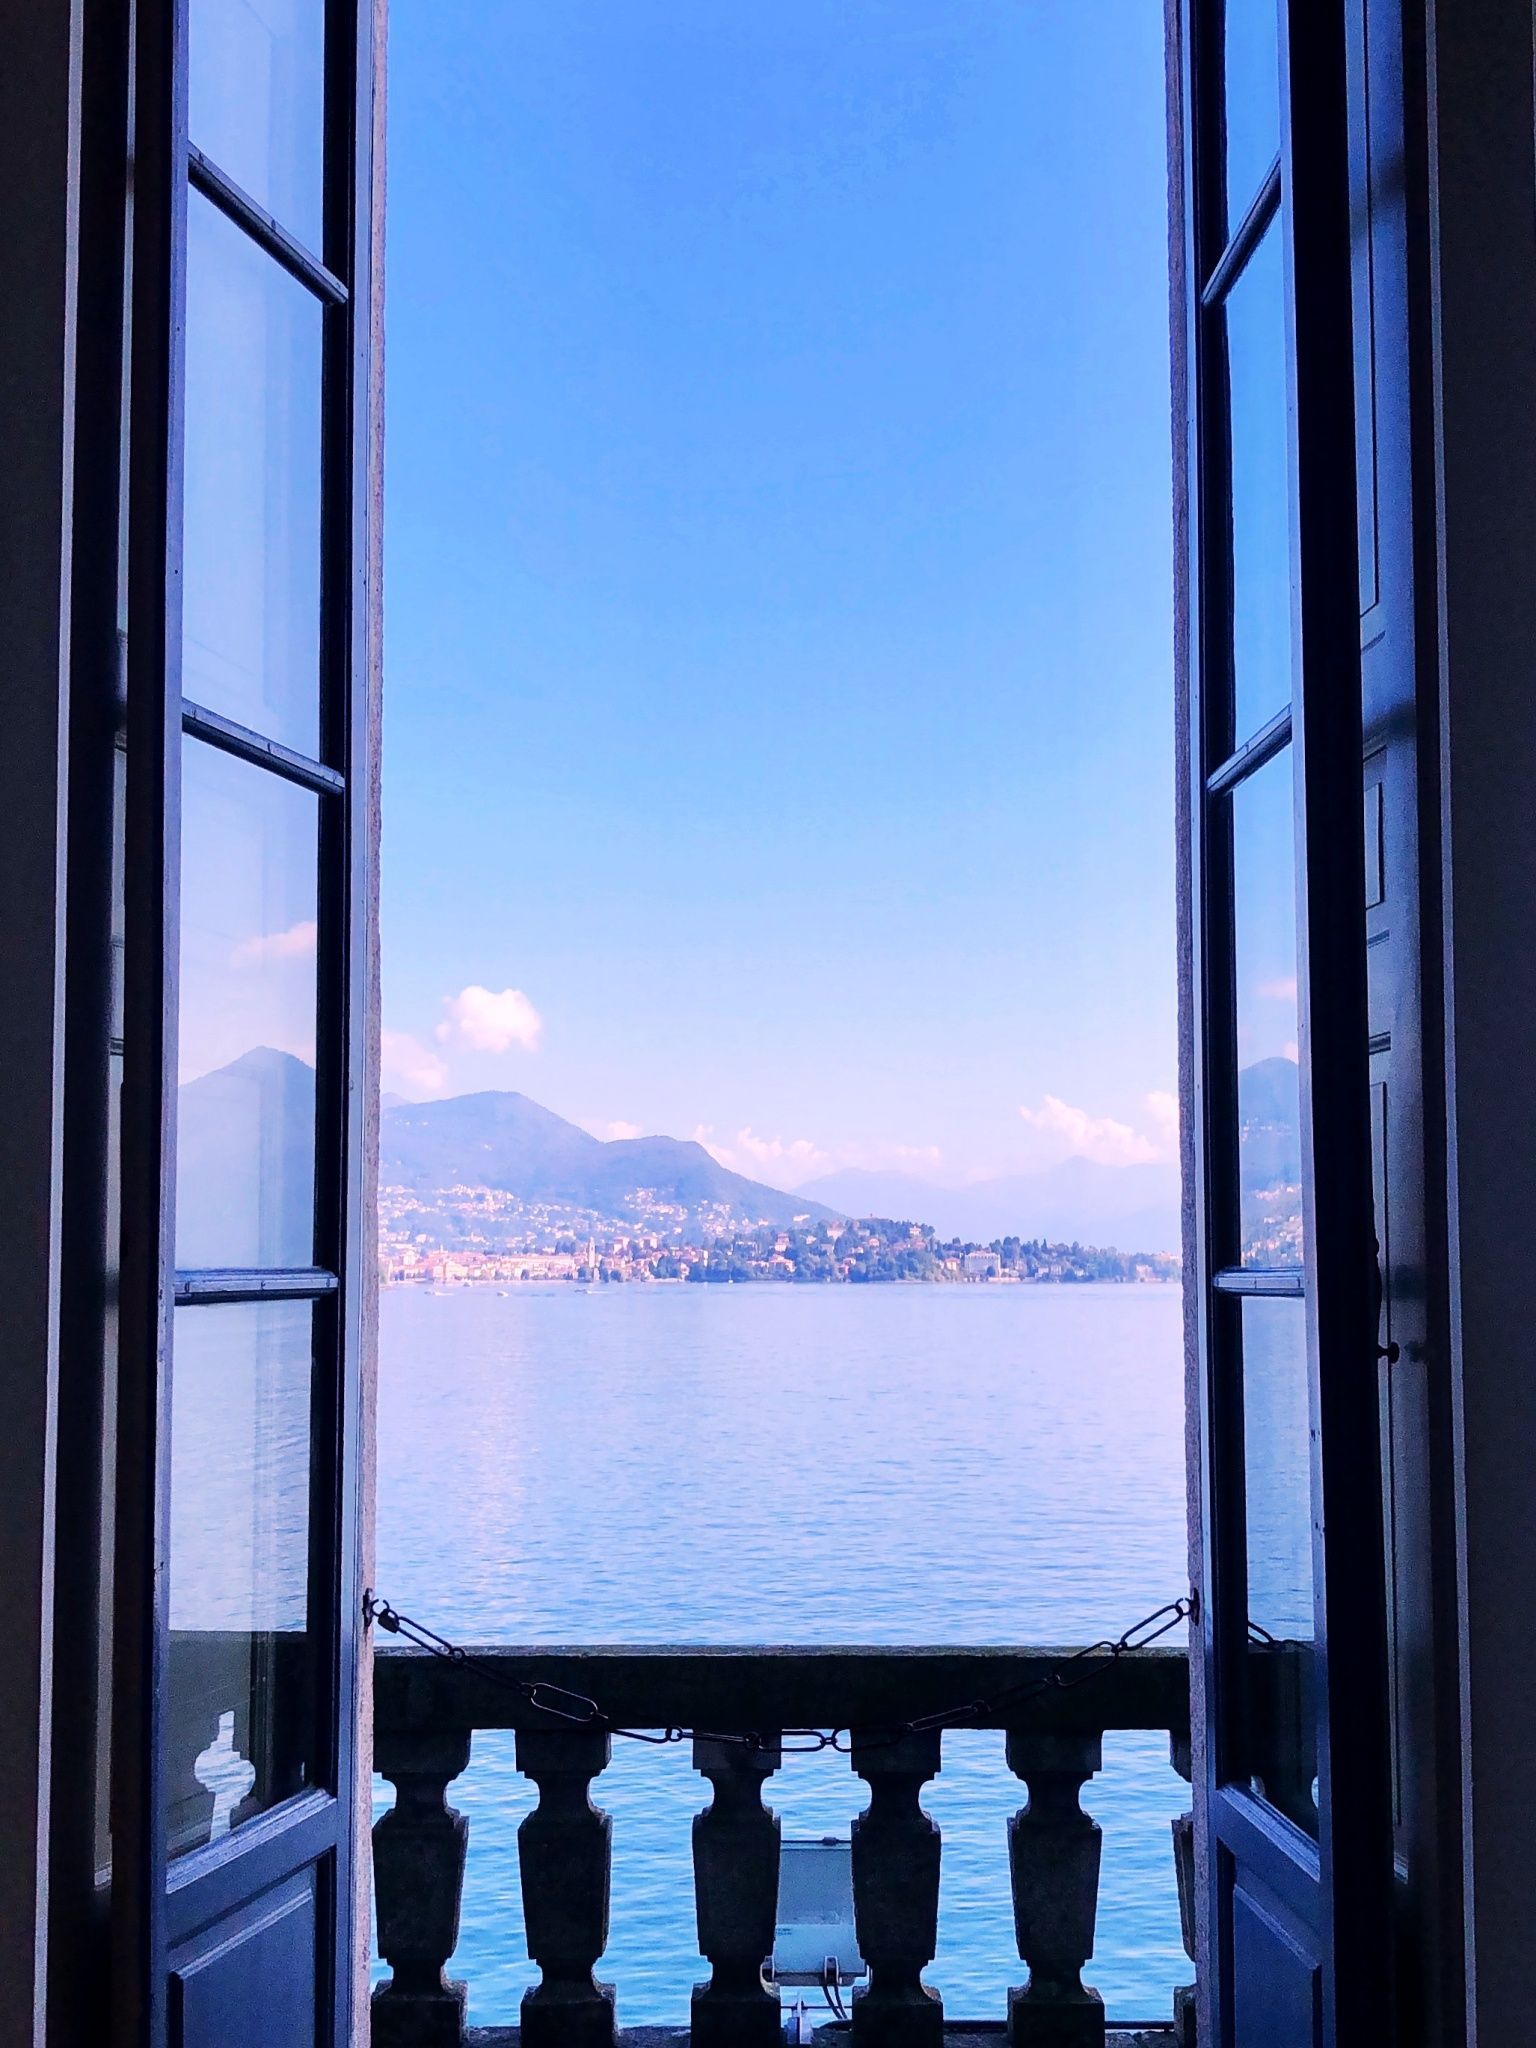 Lakes in Italy: Lake Como, Lake Garda or Lake Maggiore?